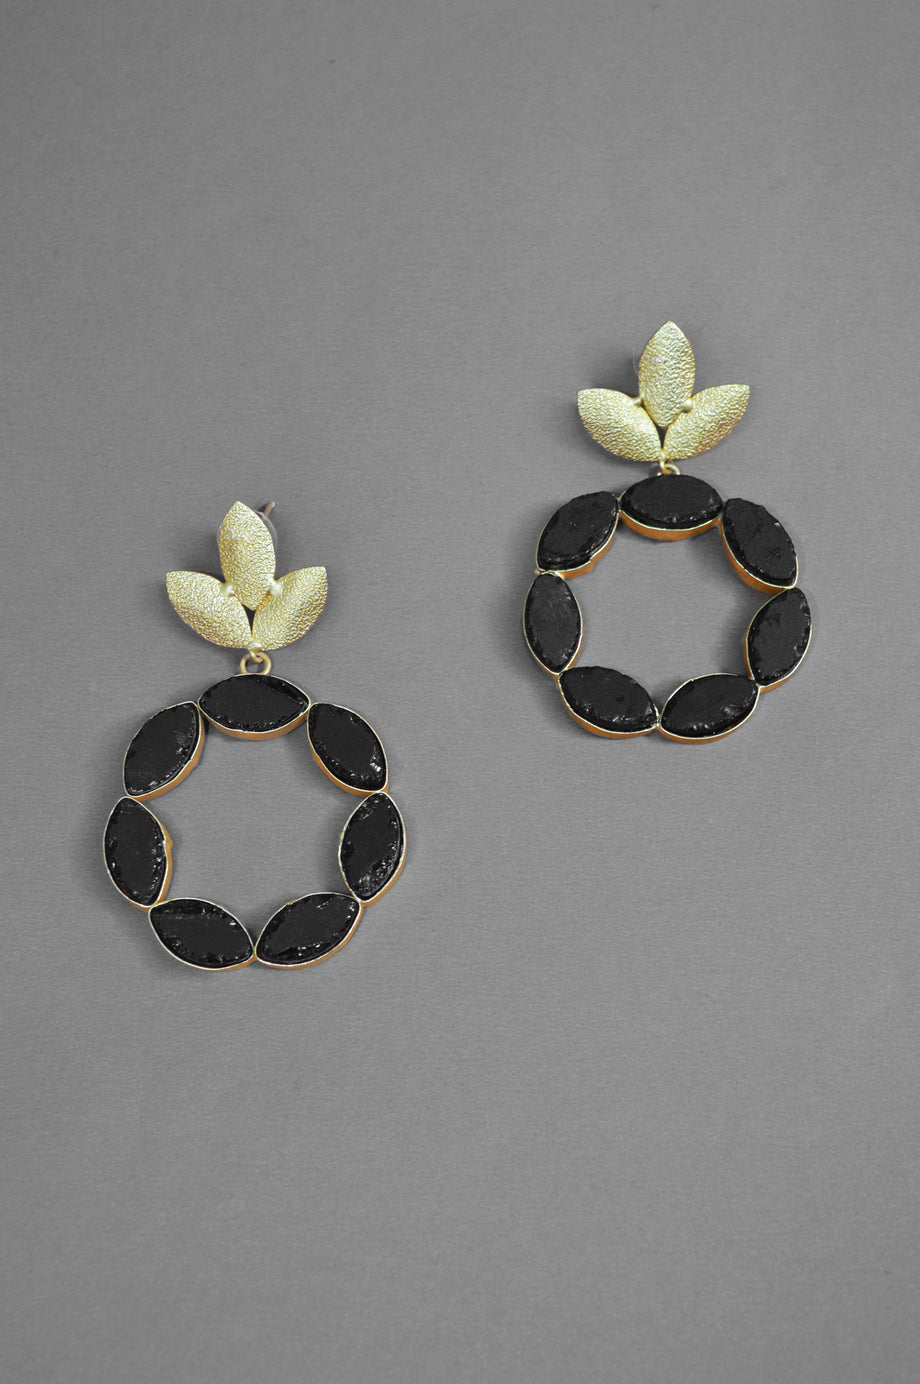 Sarah  Oxidised Earrings  Gulaal Ethnic Indian Designer Jewels  Buy  Earrings Online  Pan India and Global Delivery  Gulaal Jewels